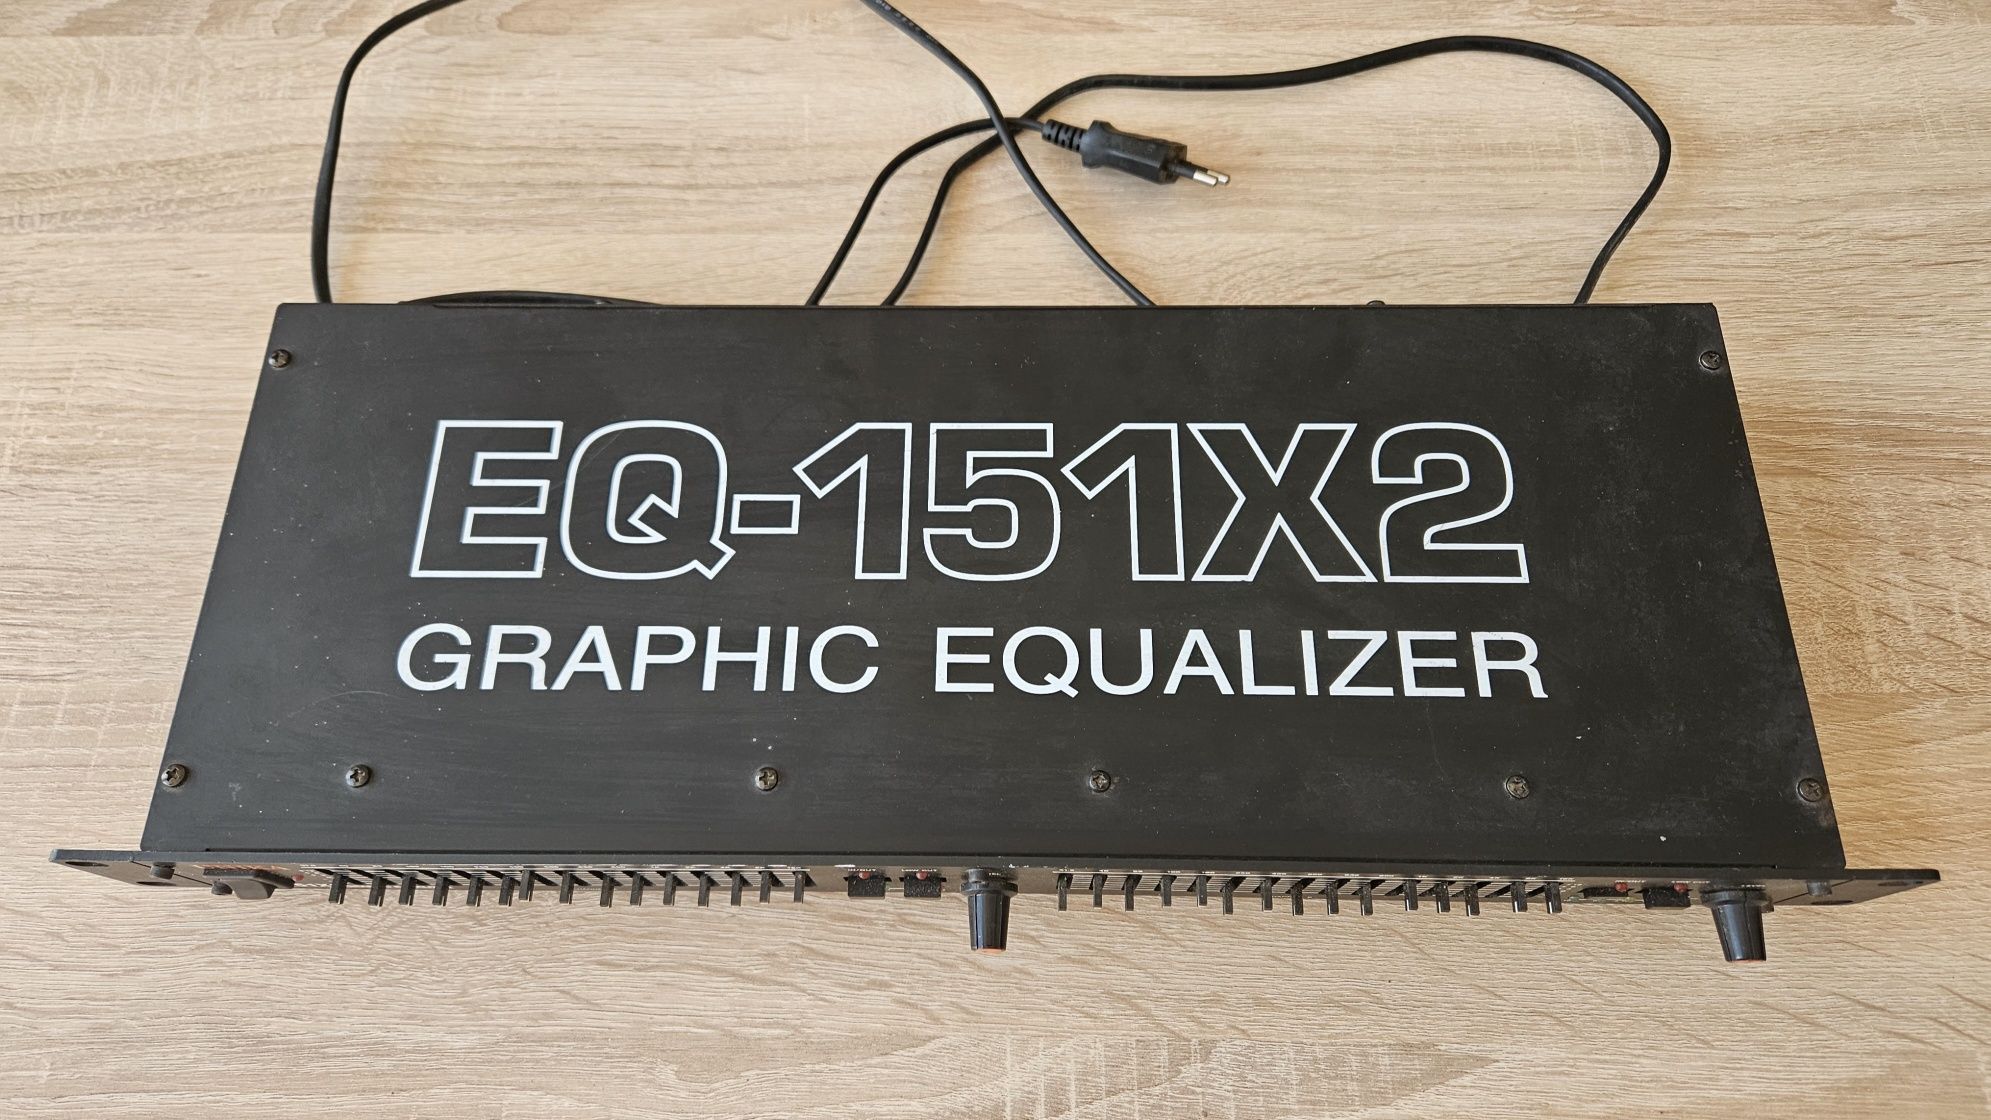 Unika eq-151x2 graphic equalizer